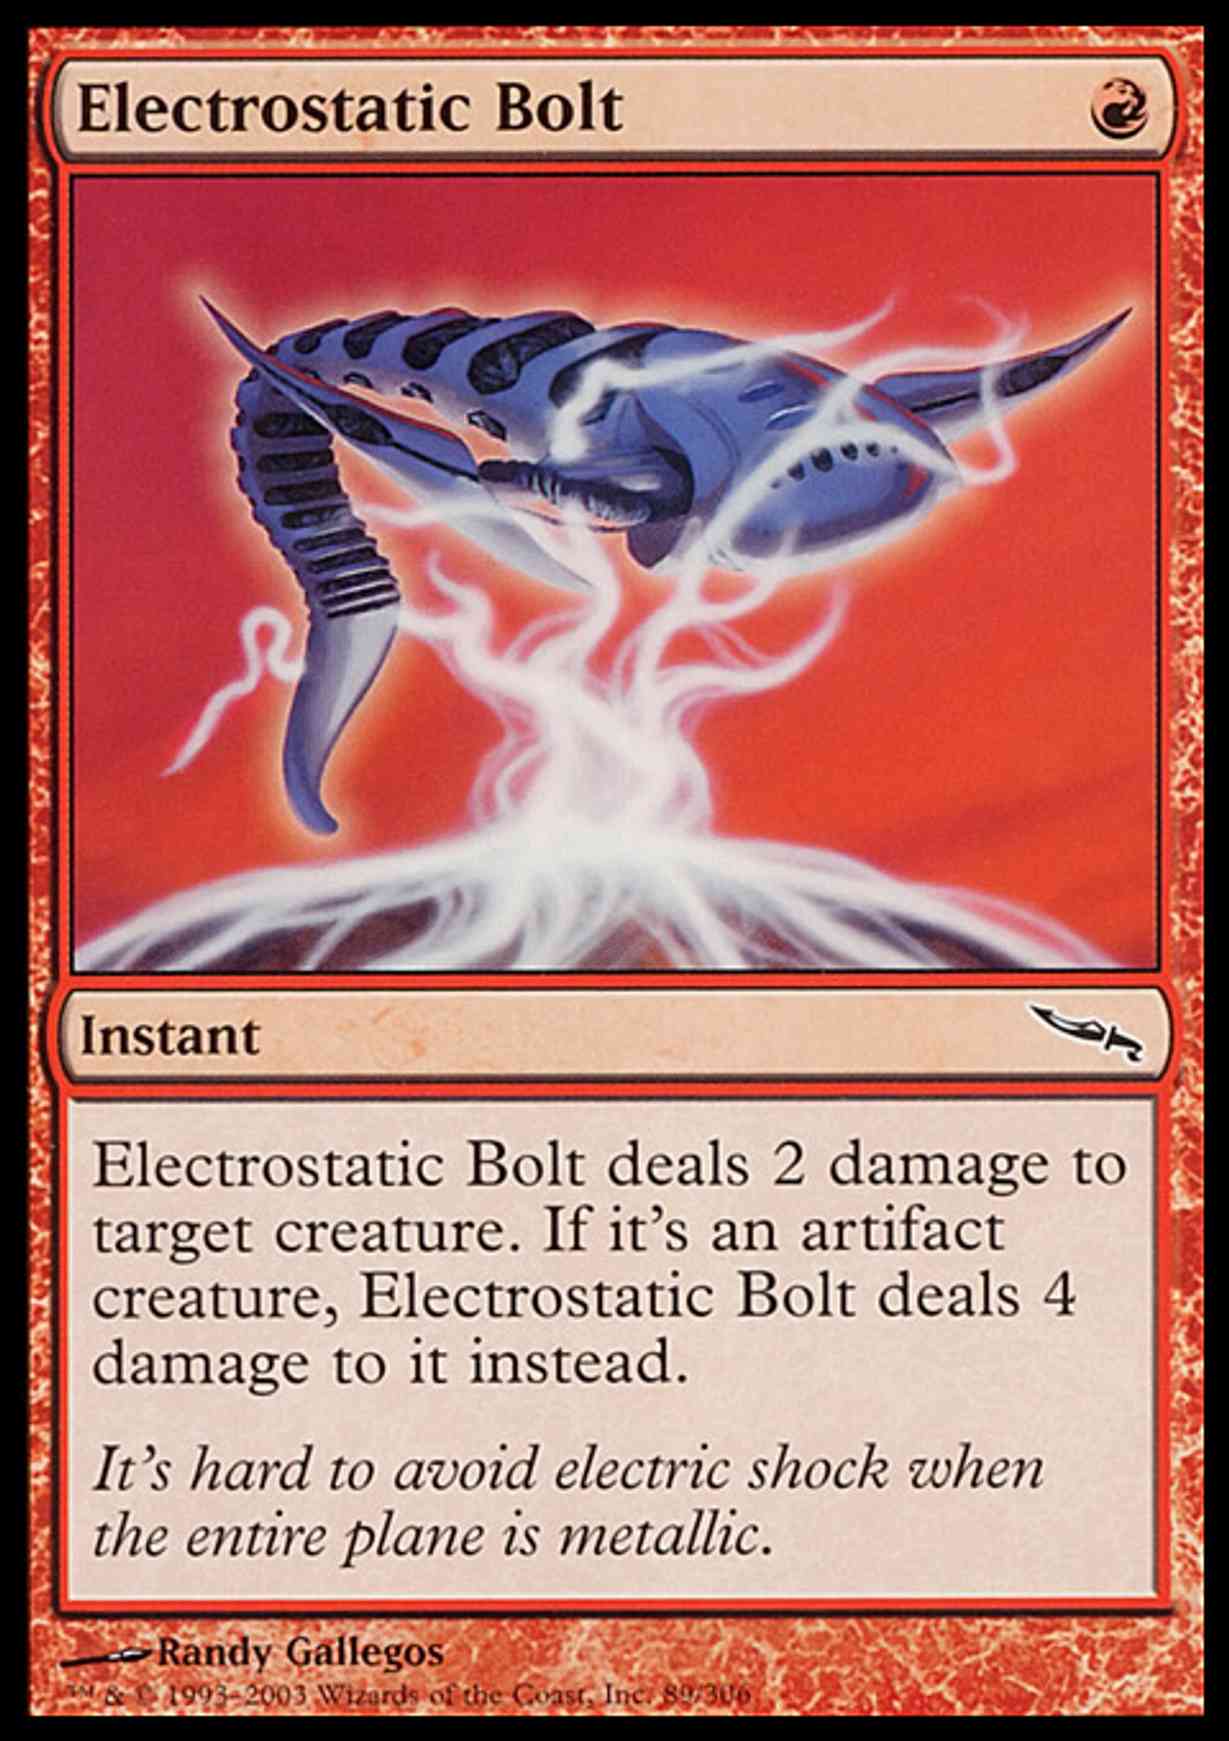 Electrostatic Bolt magic card front